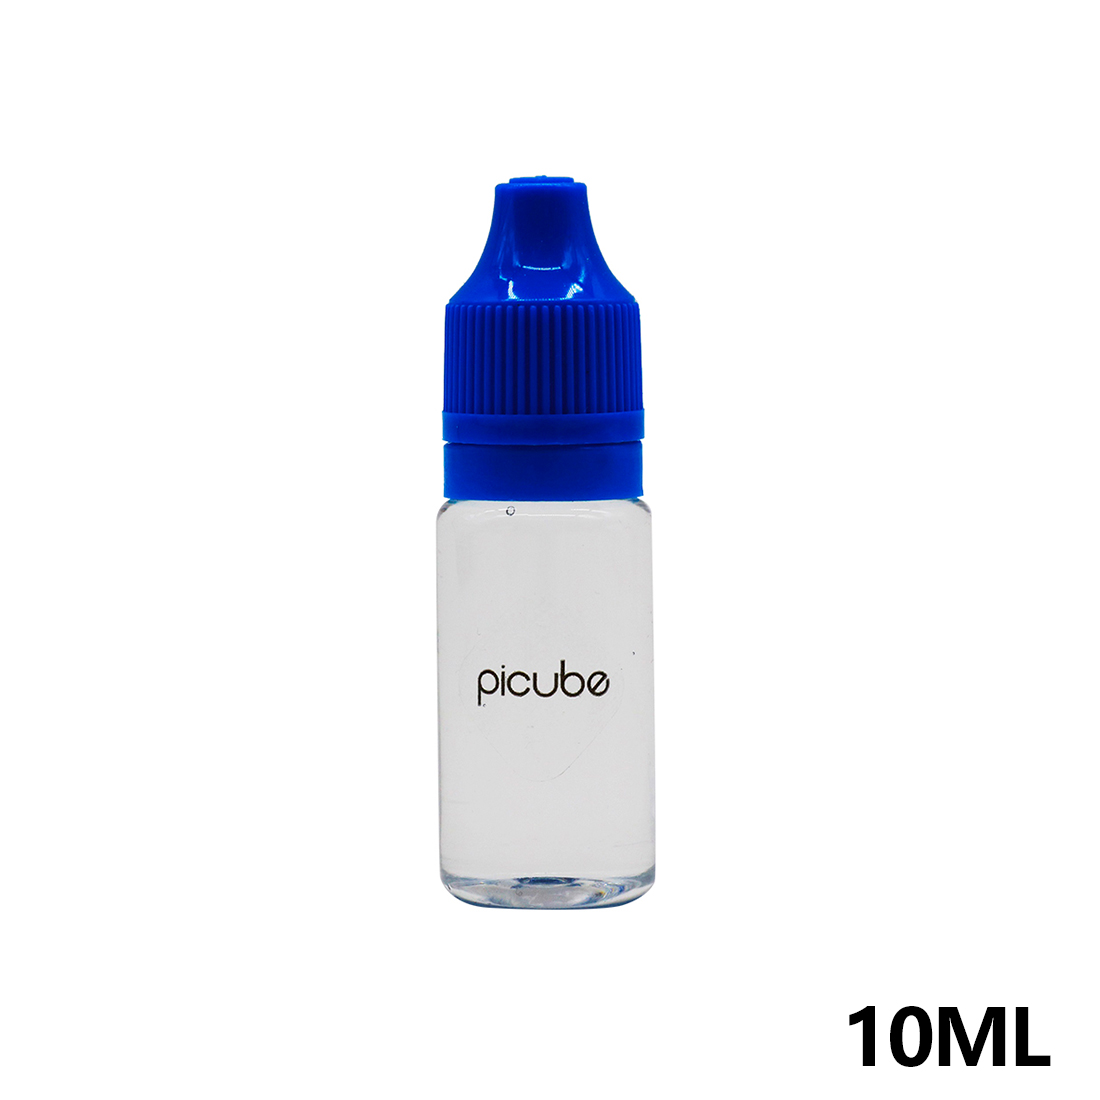 Picube 10ml speed cube lube (Blue Cap)